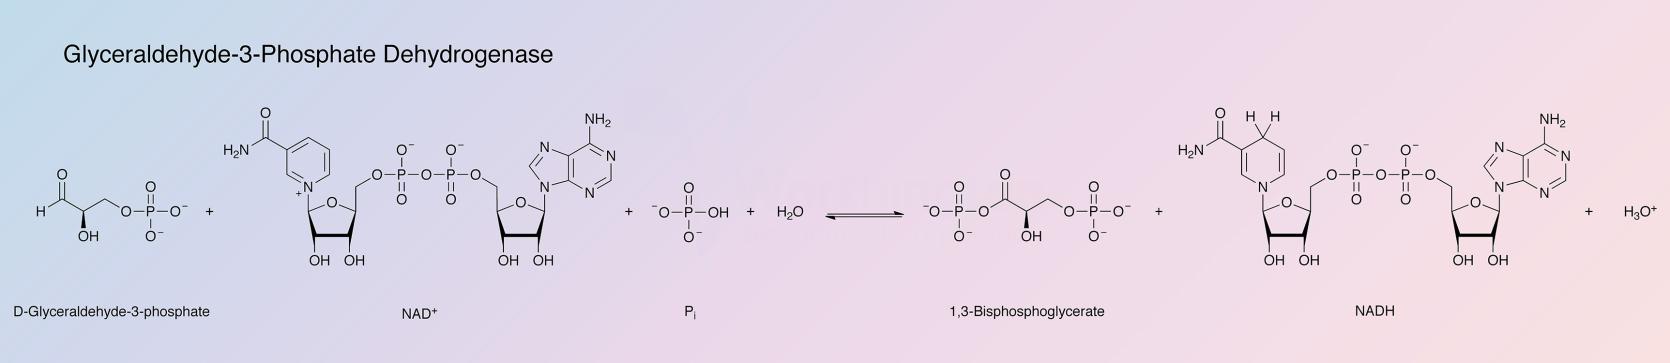 Glyceraldehyde-3-Phosphate Dehydrogenase Enzymatic Reaction